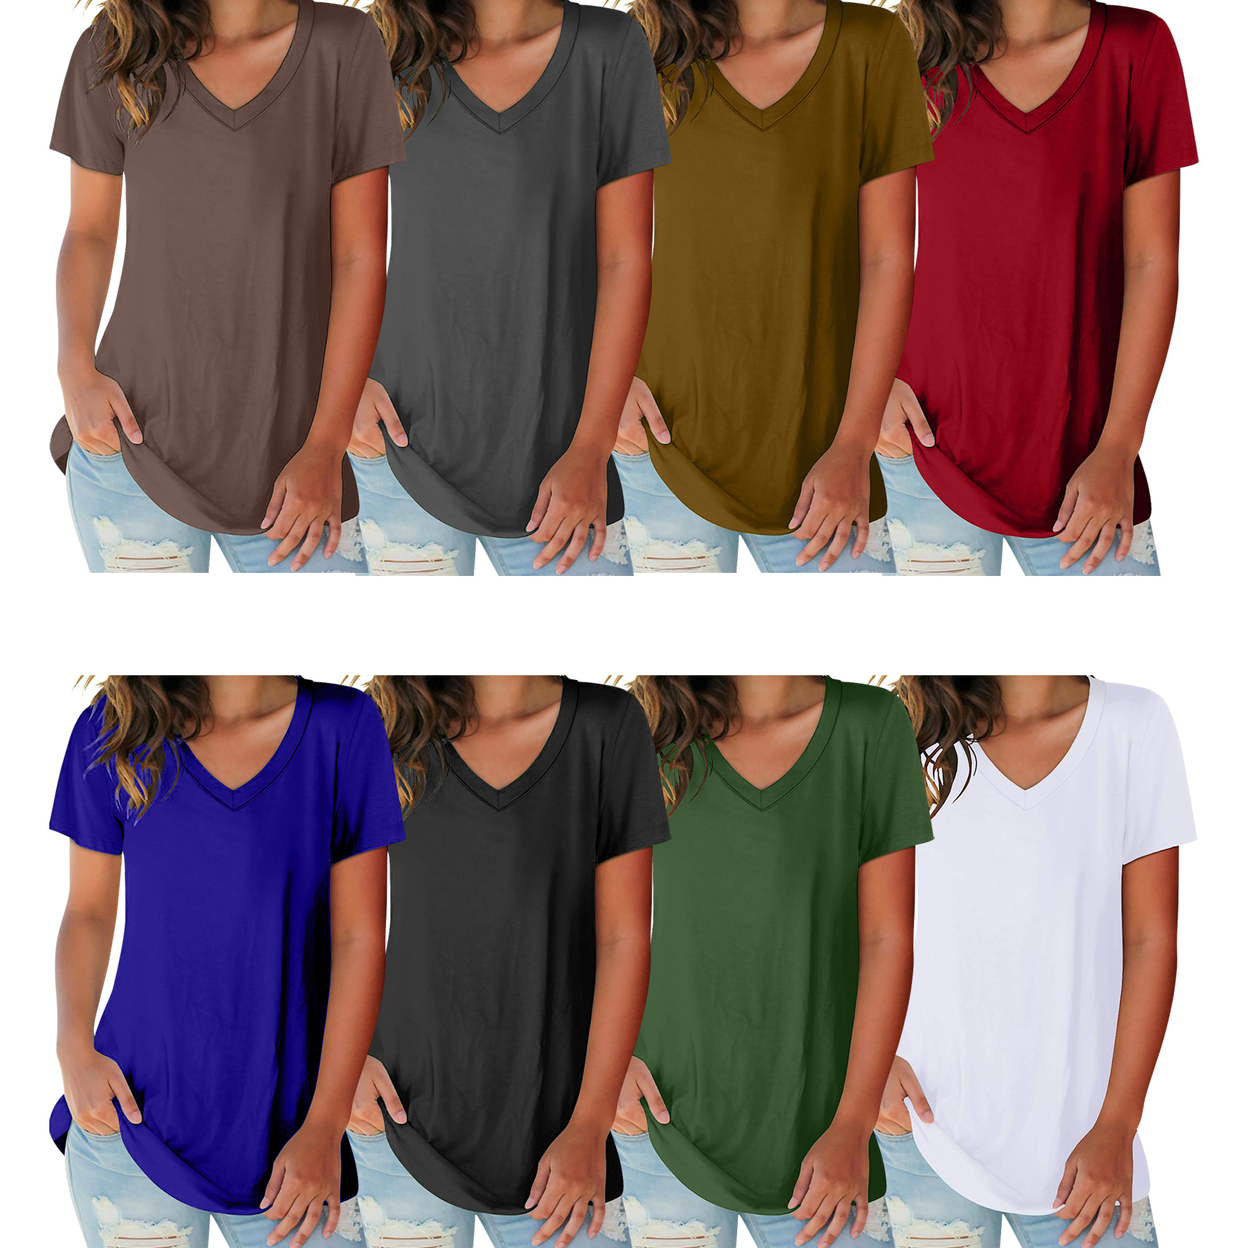 3-Pack: Women's Ultra Soft Smooth Cotton Blend Basic V-Neck Short Sleeve Shirts - Black, White, Brown, X-large